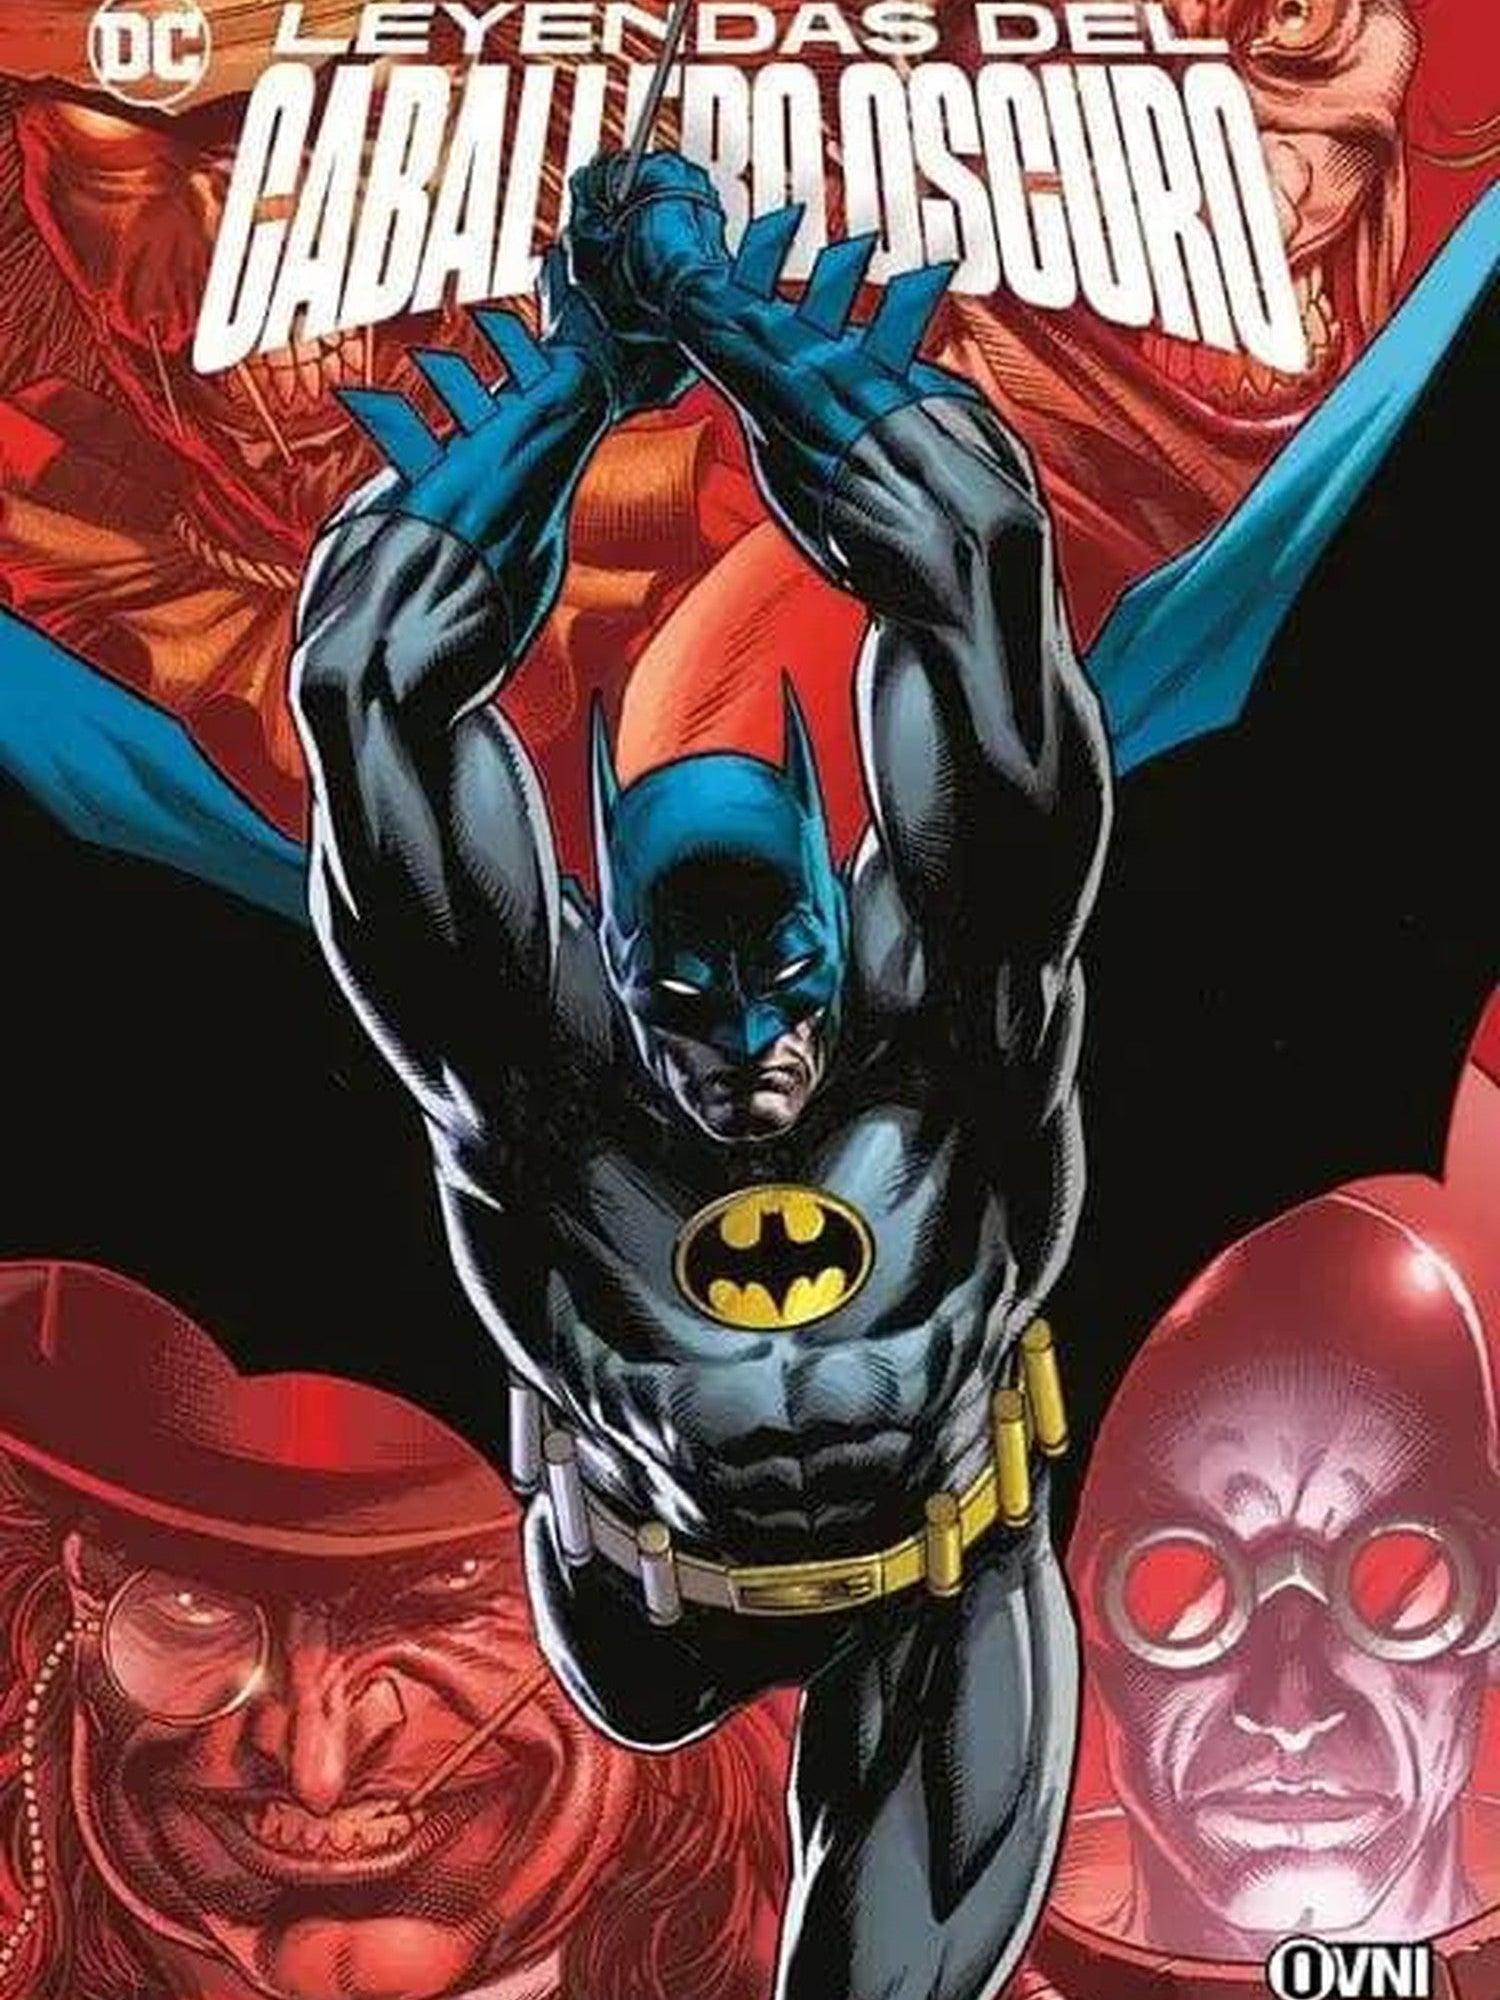 Batman: Leyendas del Caballero Oscuro OVNI Press ENcuadrocomics